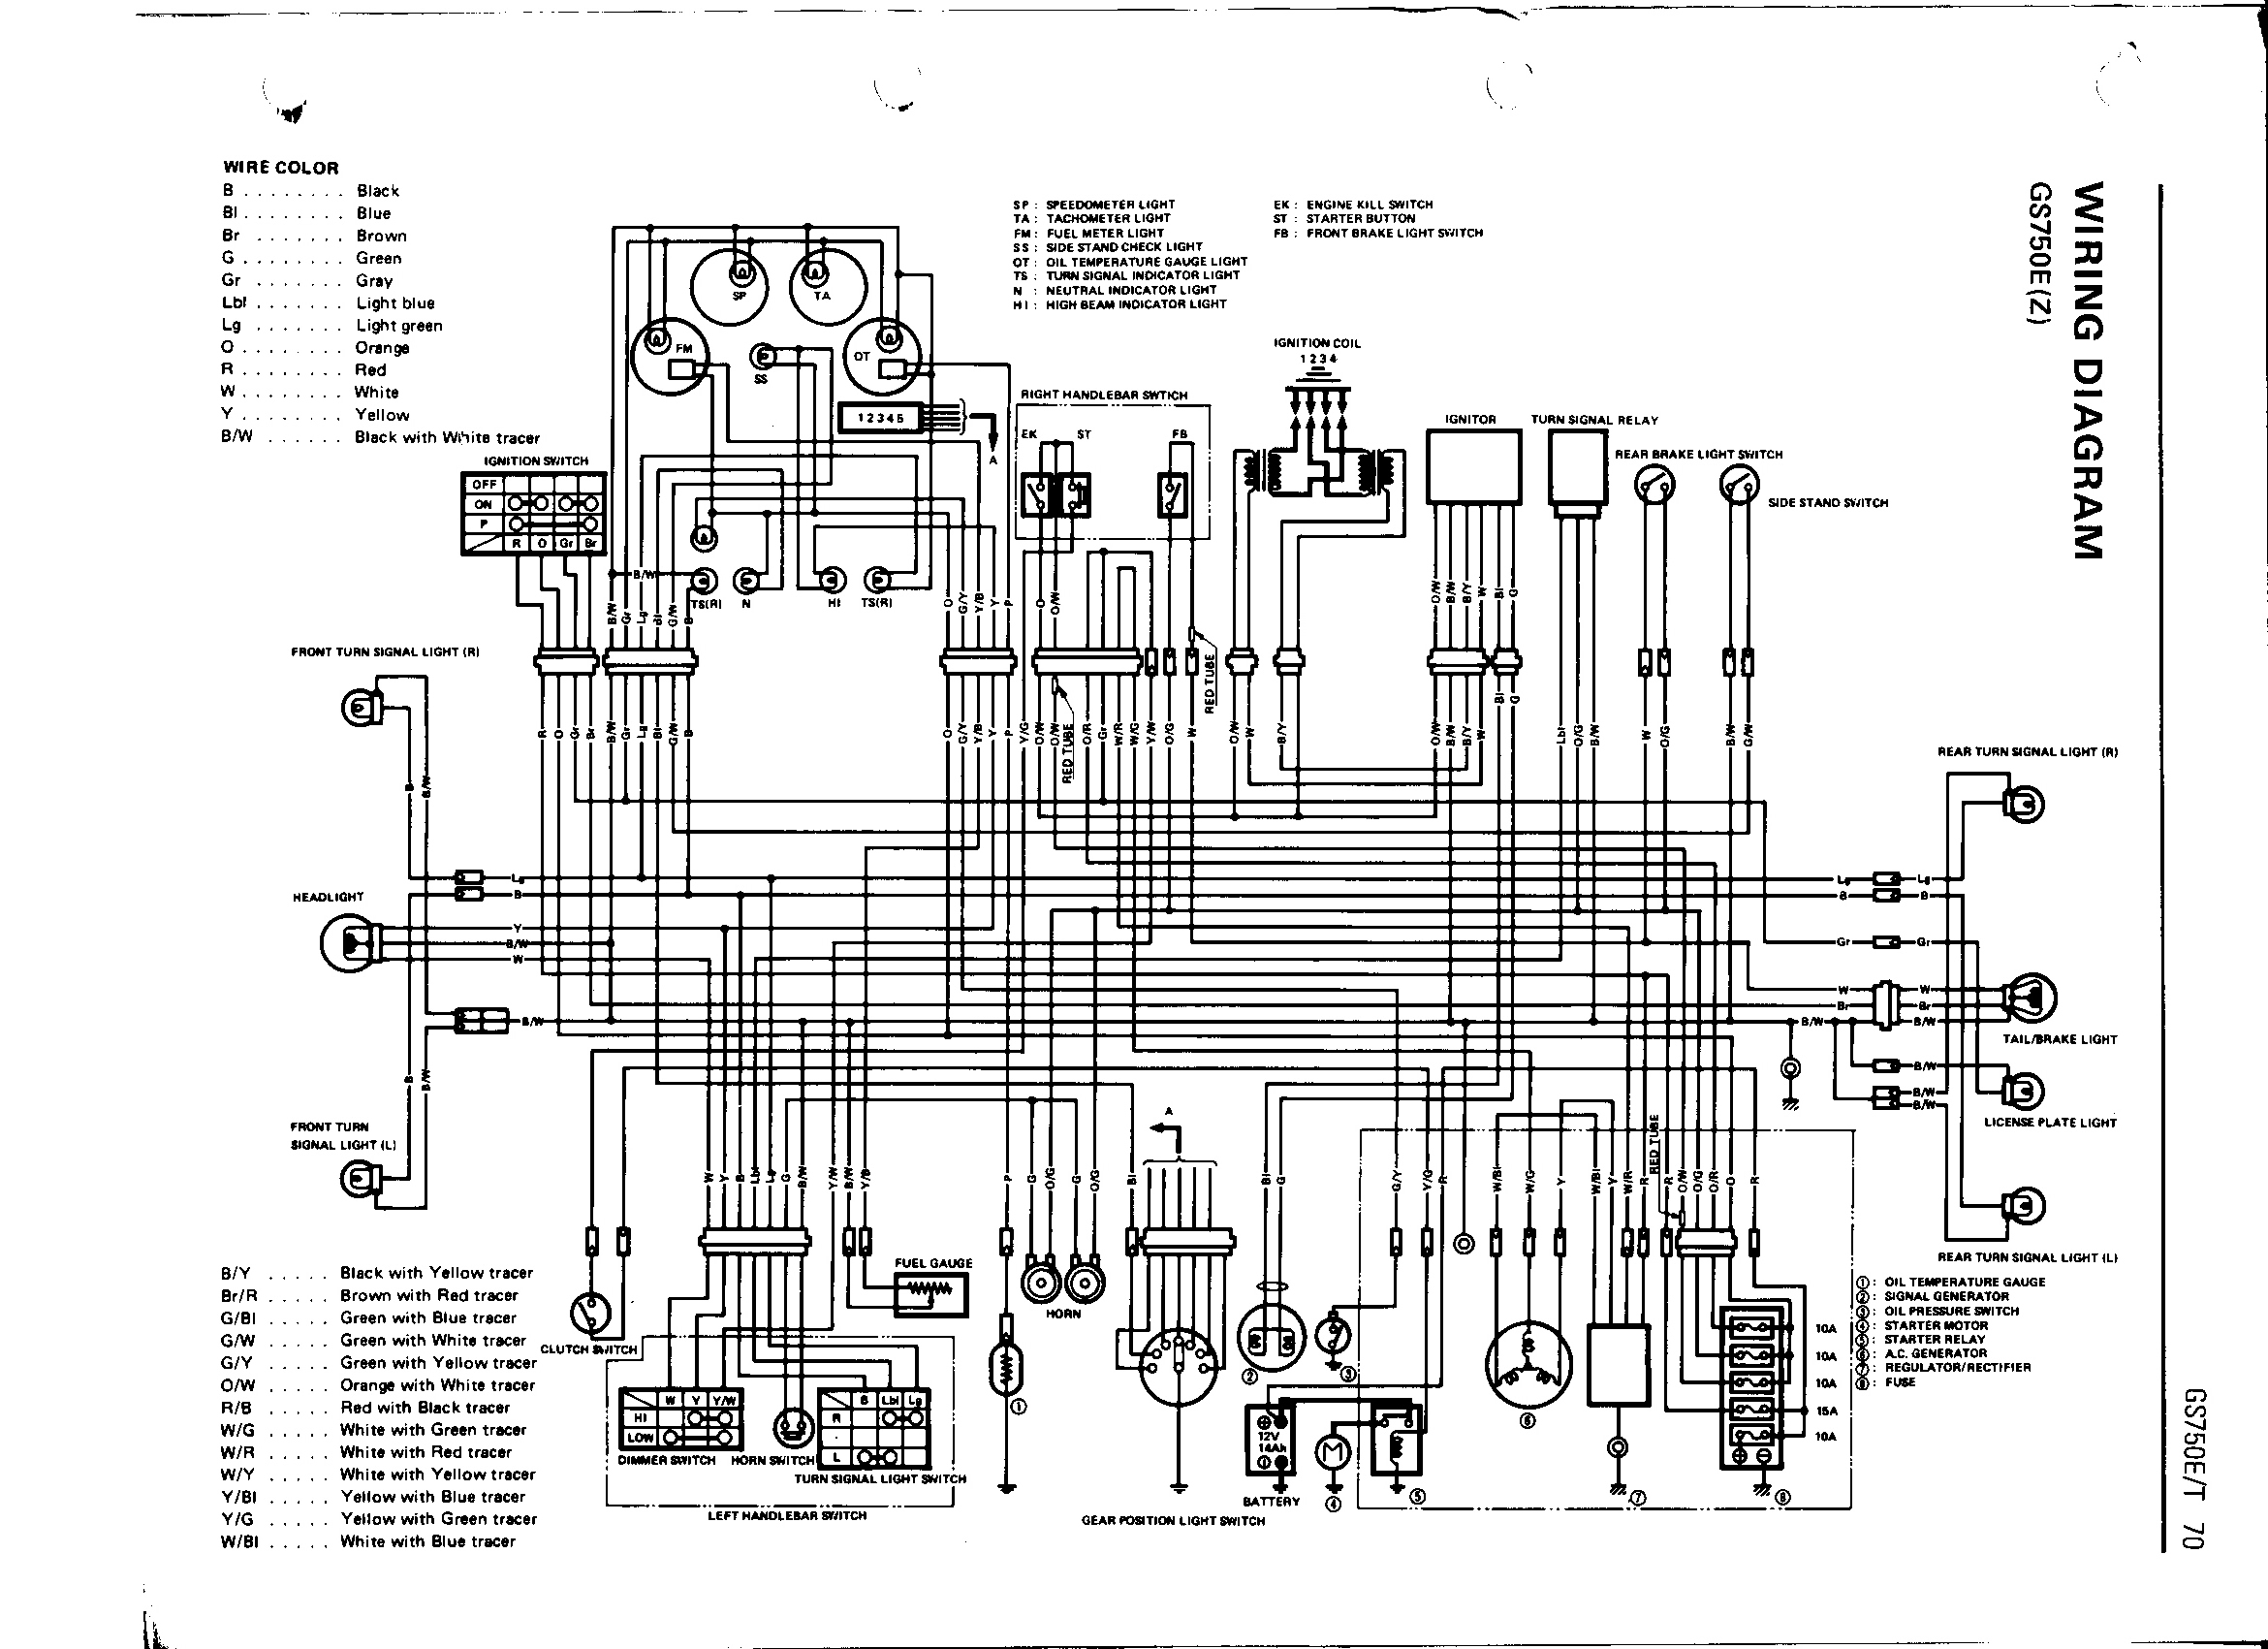 1983 Suzuki Gs550L Wiring Diagram Pictures - Wiring Diagram Sample